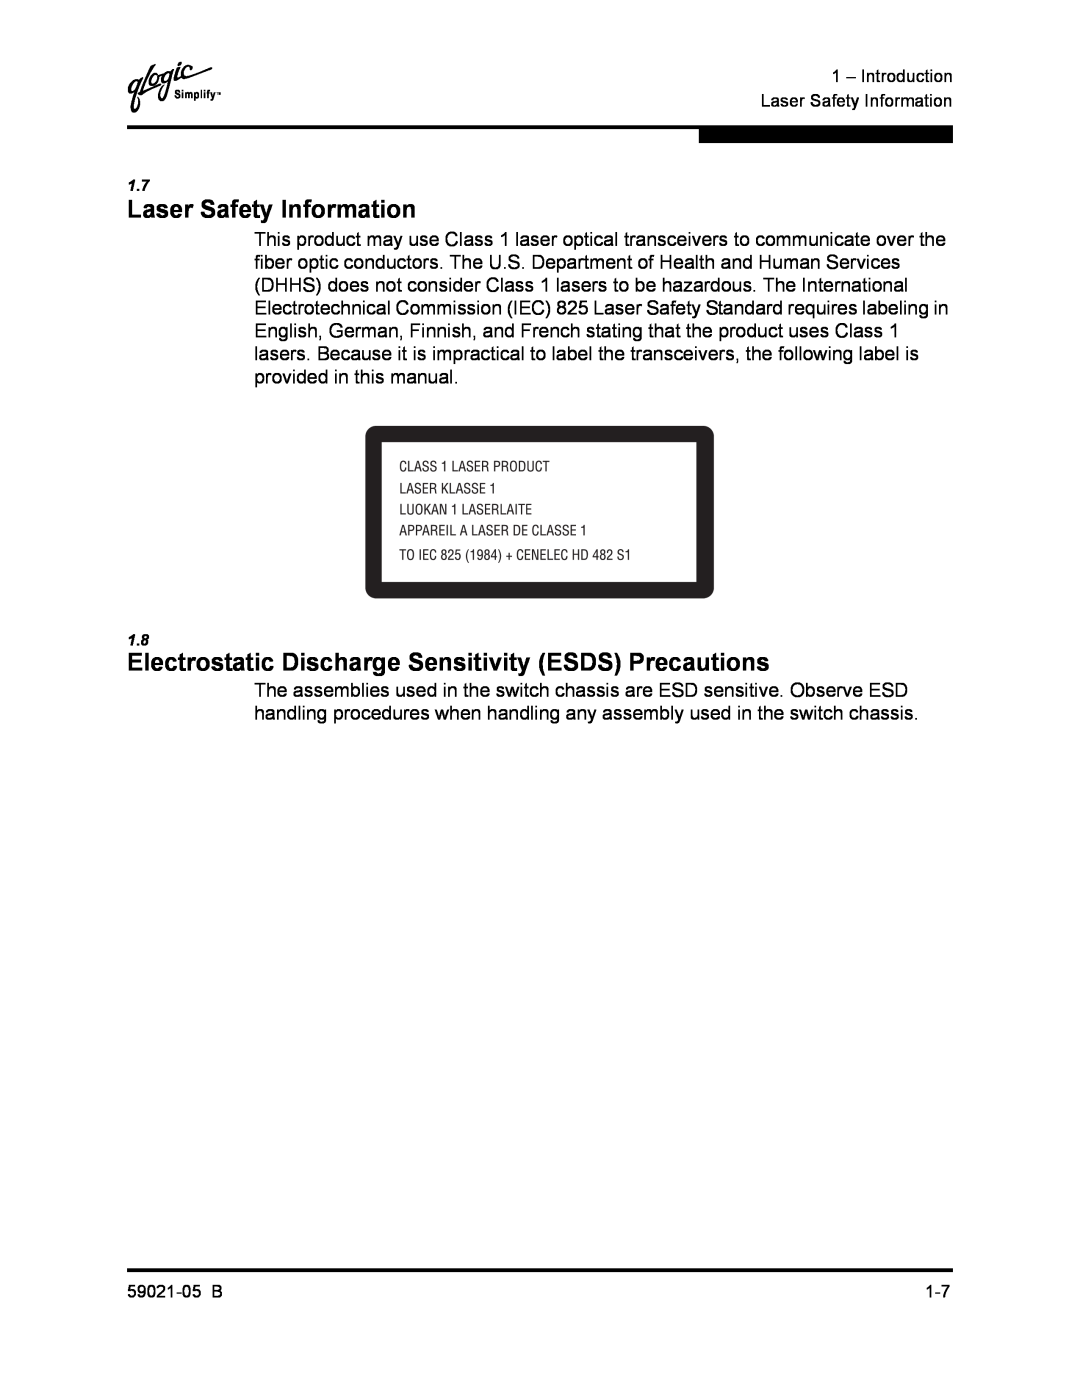 Q-Logic 59021-05 B manual Laser Safety Information, Electrostatic Discharge Sensitivity ESDS Precautions 